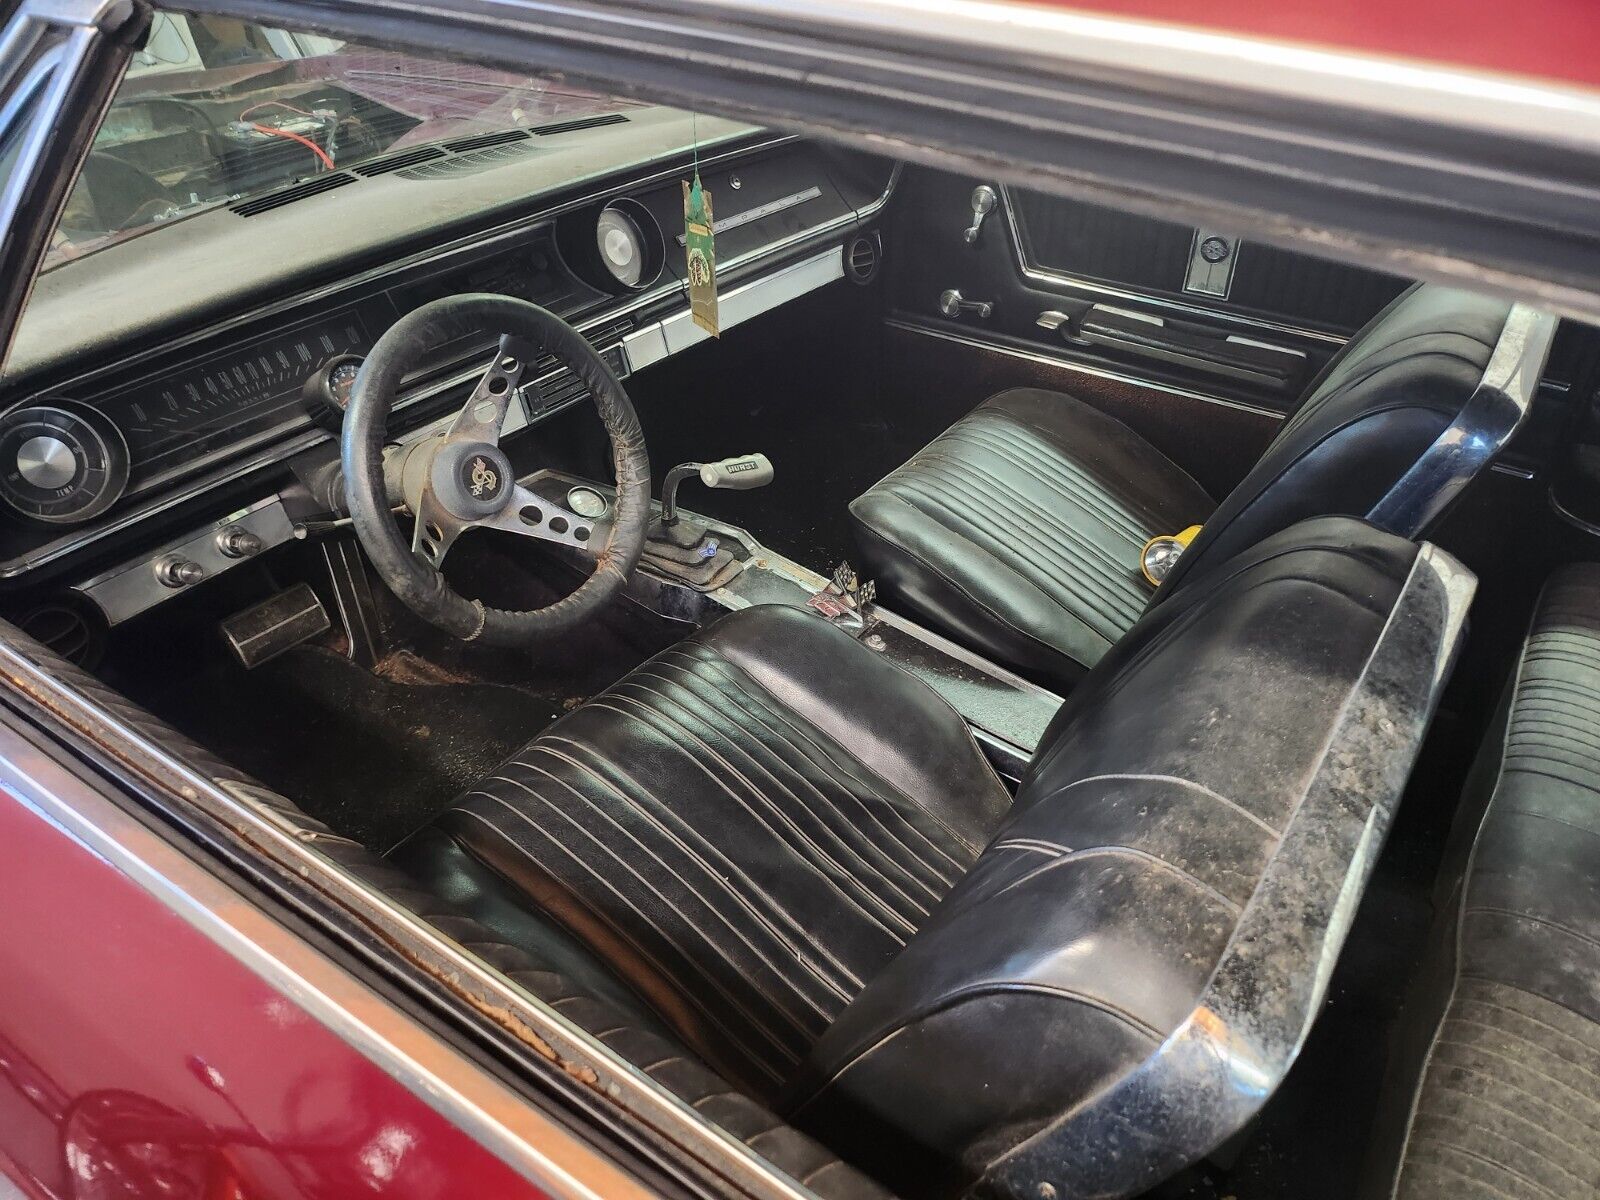 1965 Impala SS for Restoration